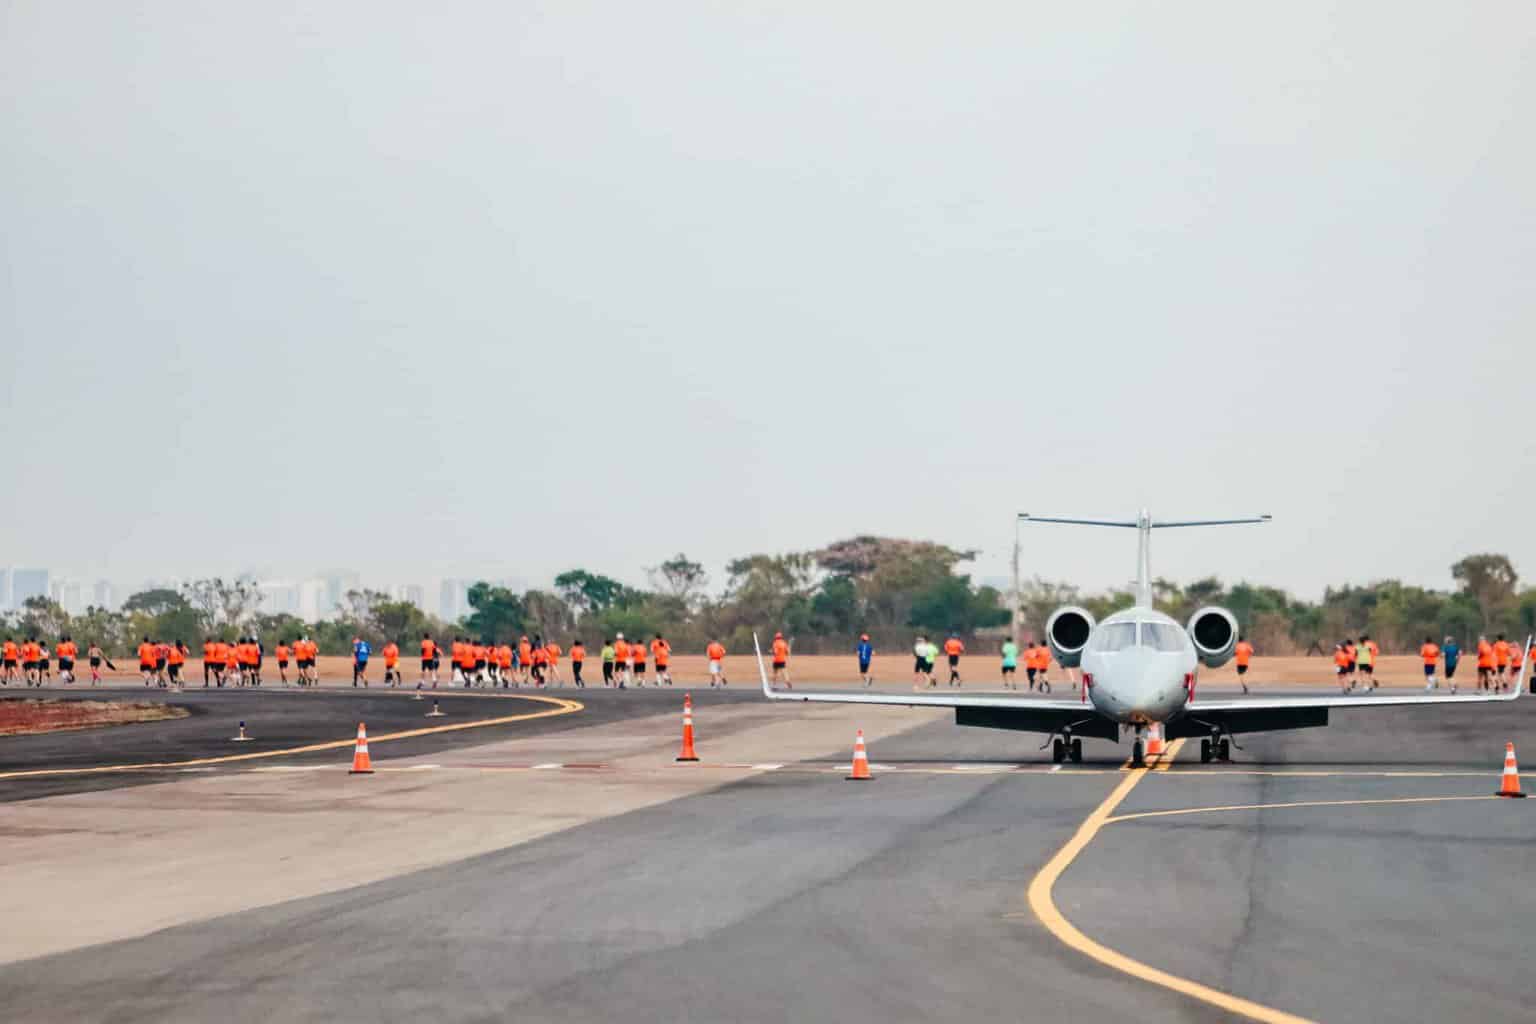 Aeroporto de Brasília Flying Run BSB corrida de rua pista de aviões